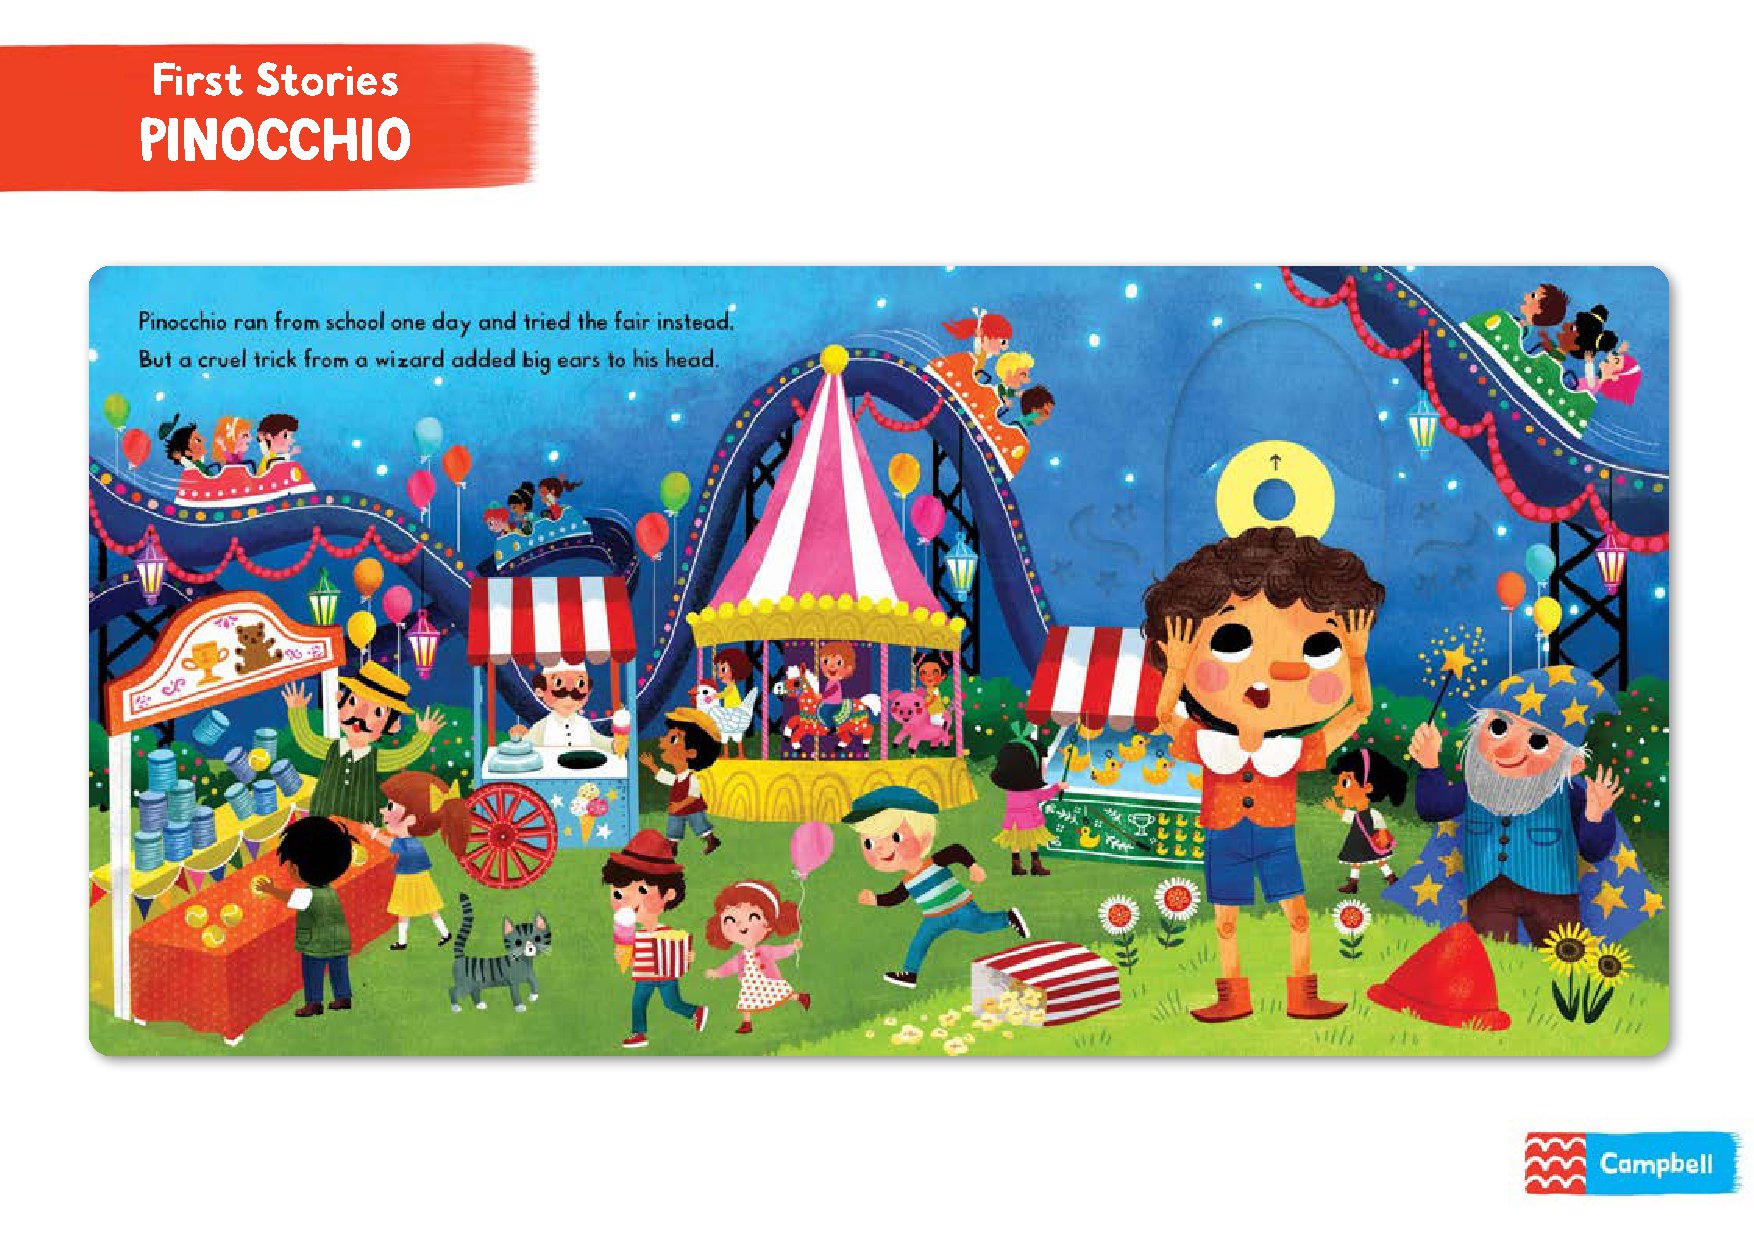 First Stories: Pinocchio